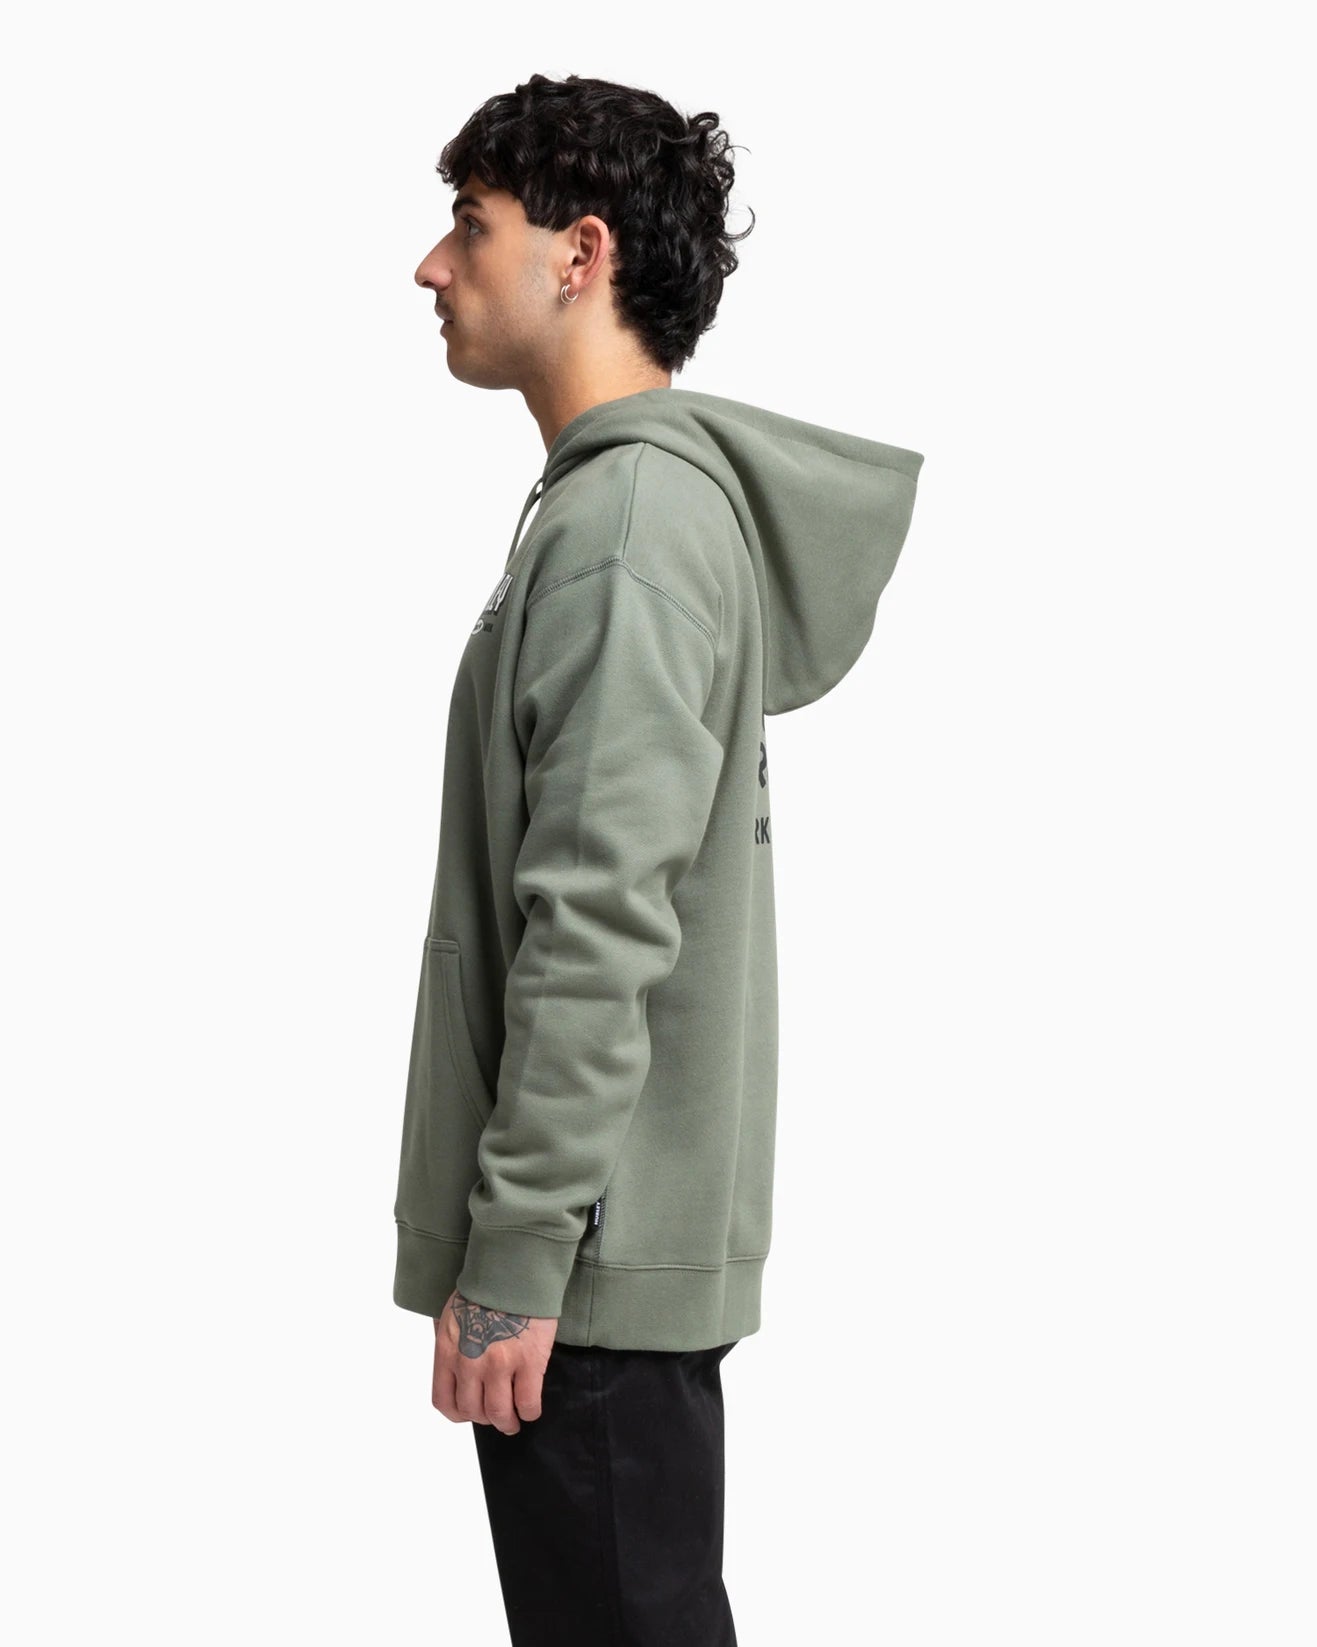 relentless pullover, agave green, hurley, mens hoodies